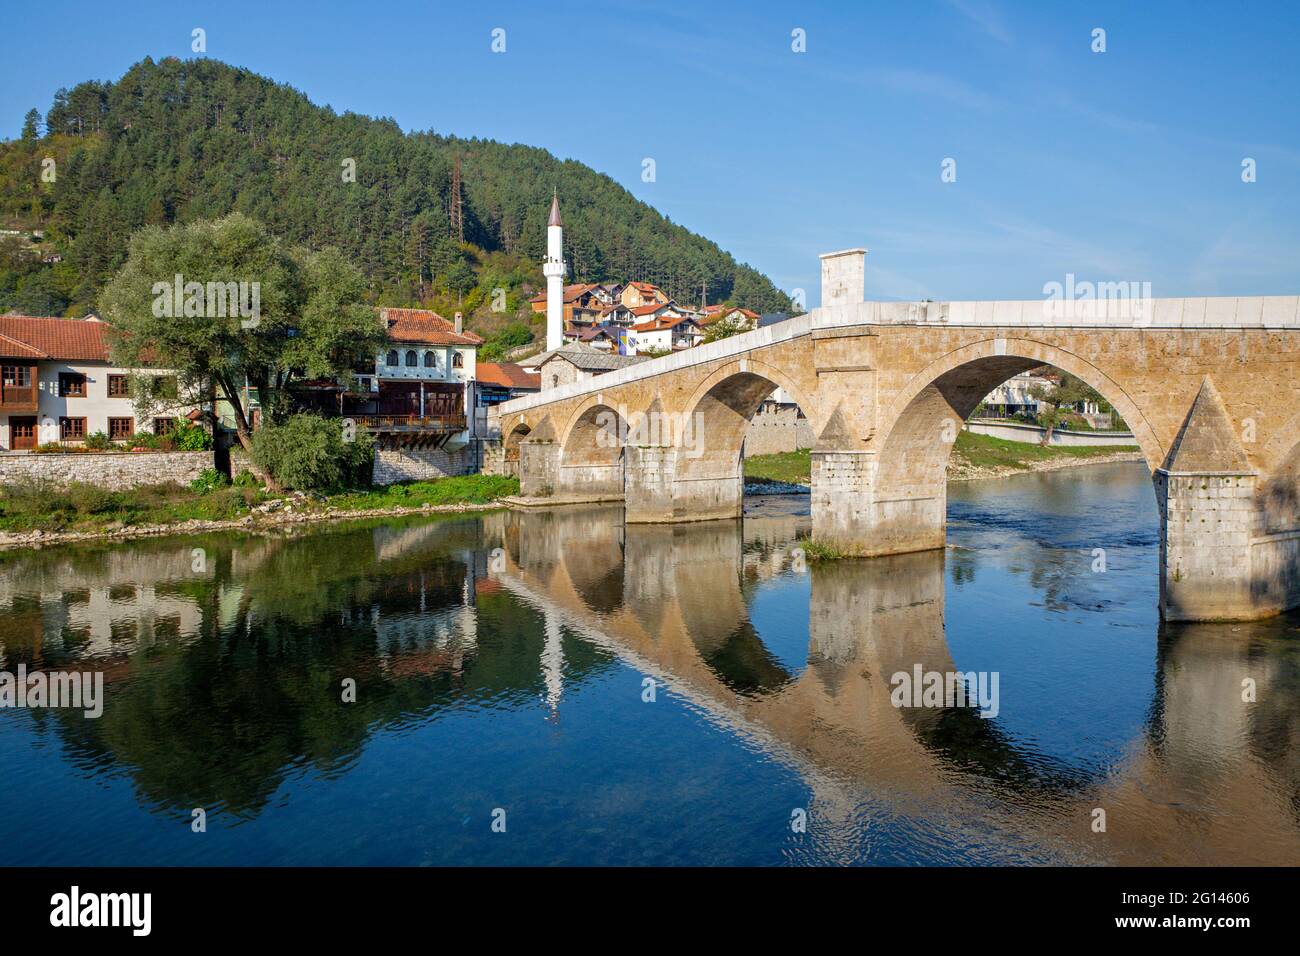 Storico ponte ad arco nella città vecchia Konic, Bosnia ed Erzegovina Foto Stock